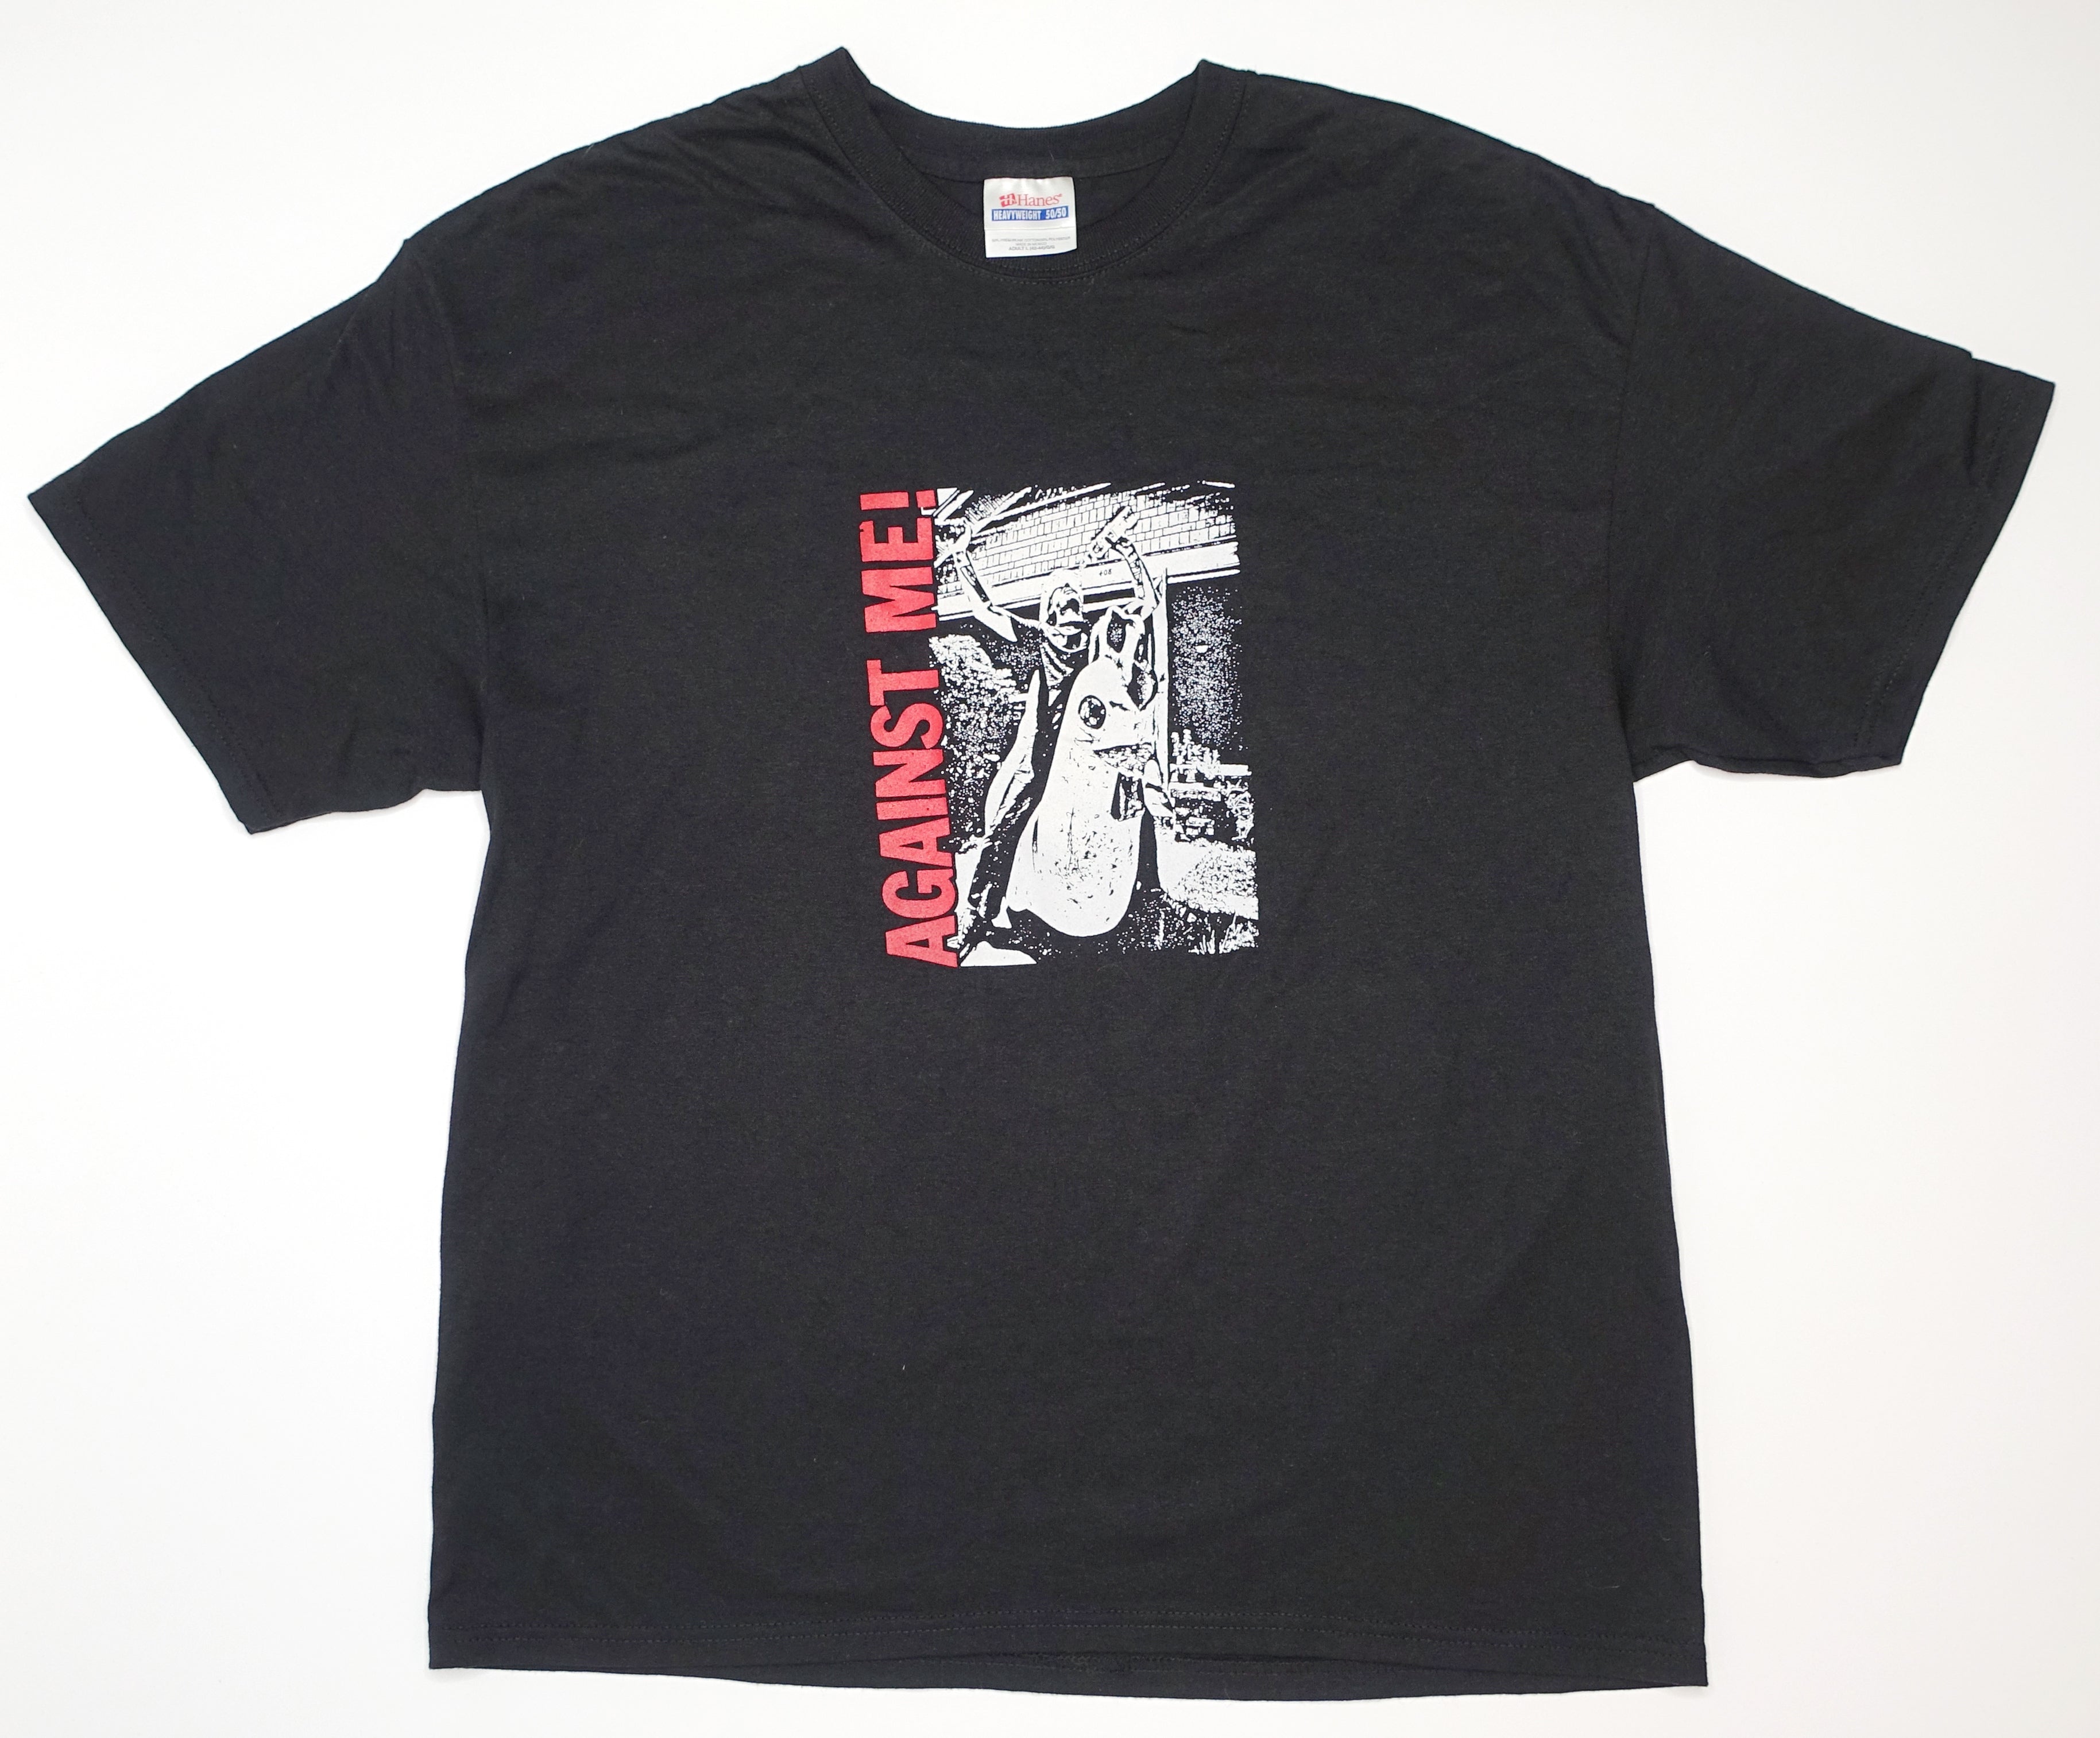 Against Me! - As The Eternal Cowboy / Chicken Cowboy 2003 Tour Shirt Size Large